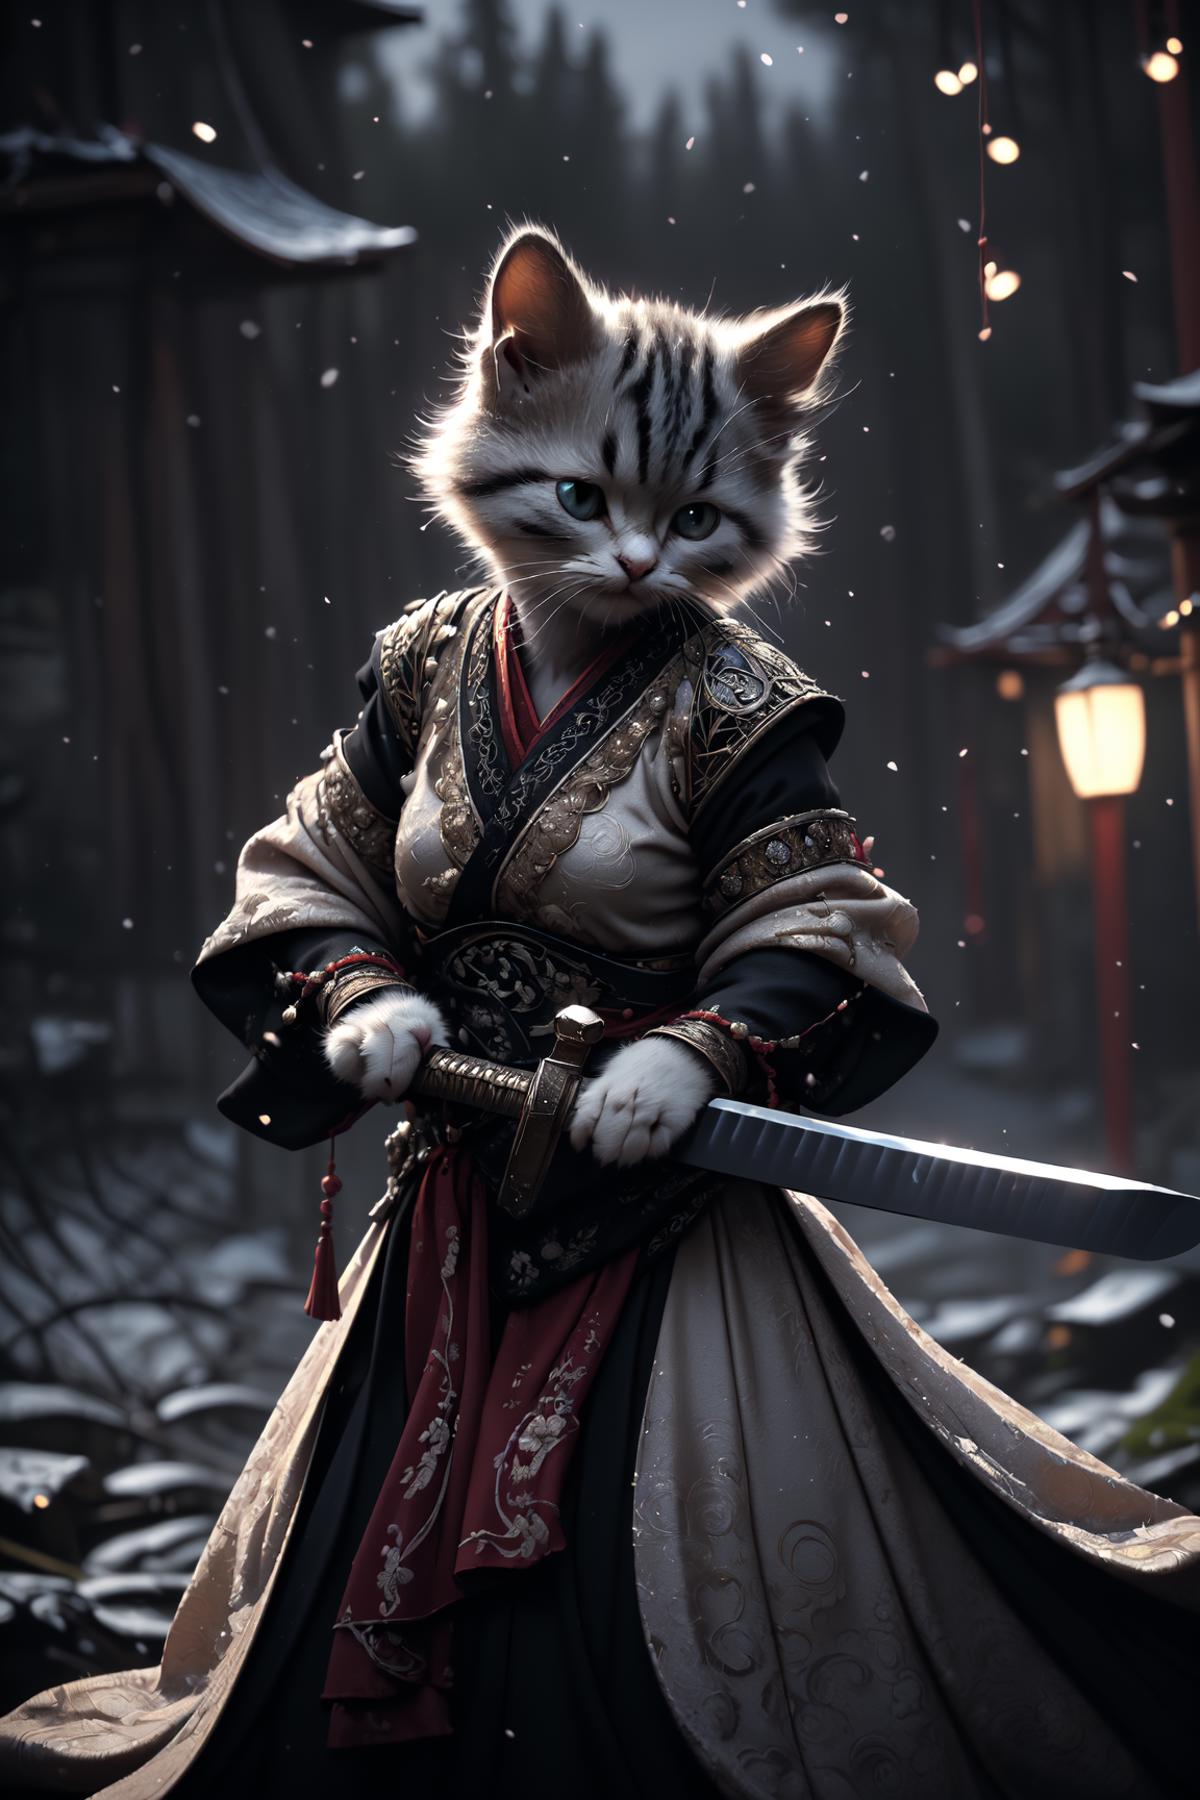 A Cat Dressed as a Samurai Warrior Holding a Sword.